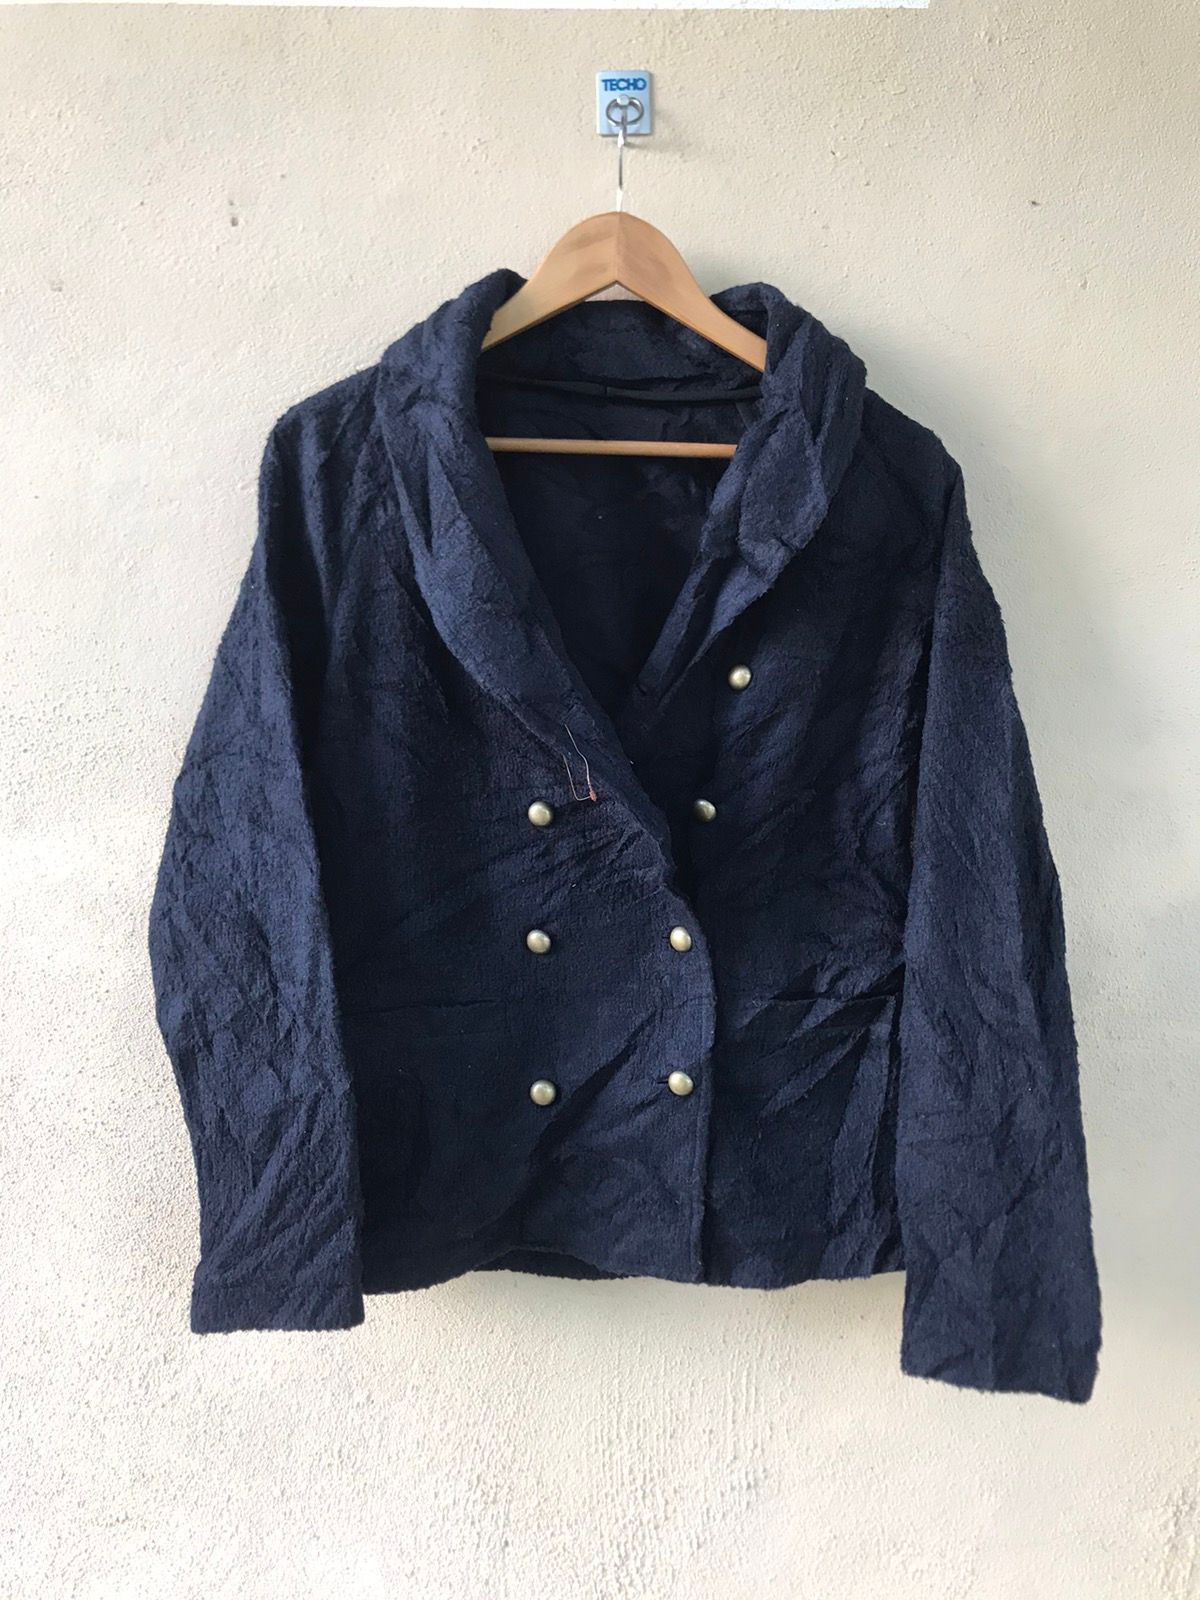 Vintage Beams Double Breasted button fleece cardigan jacket - 1